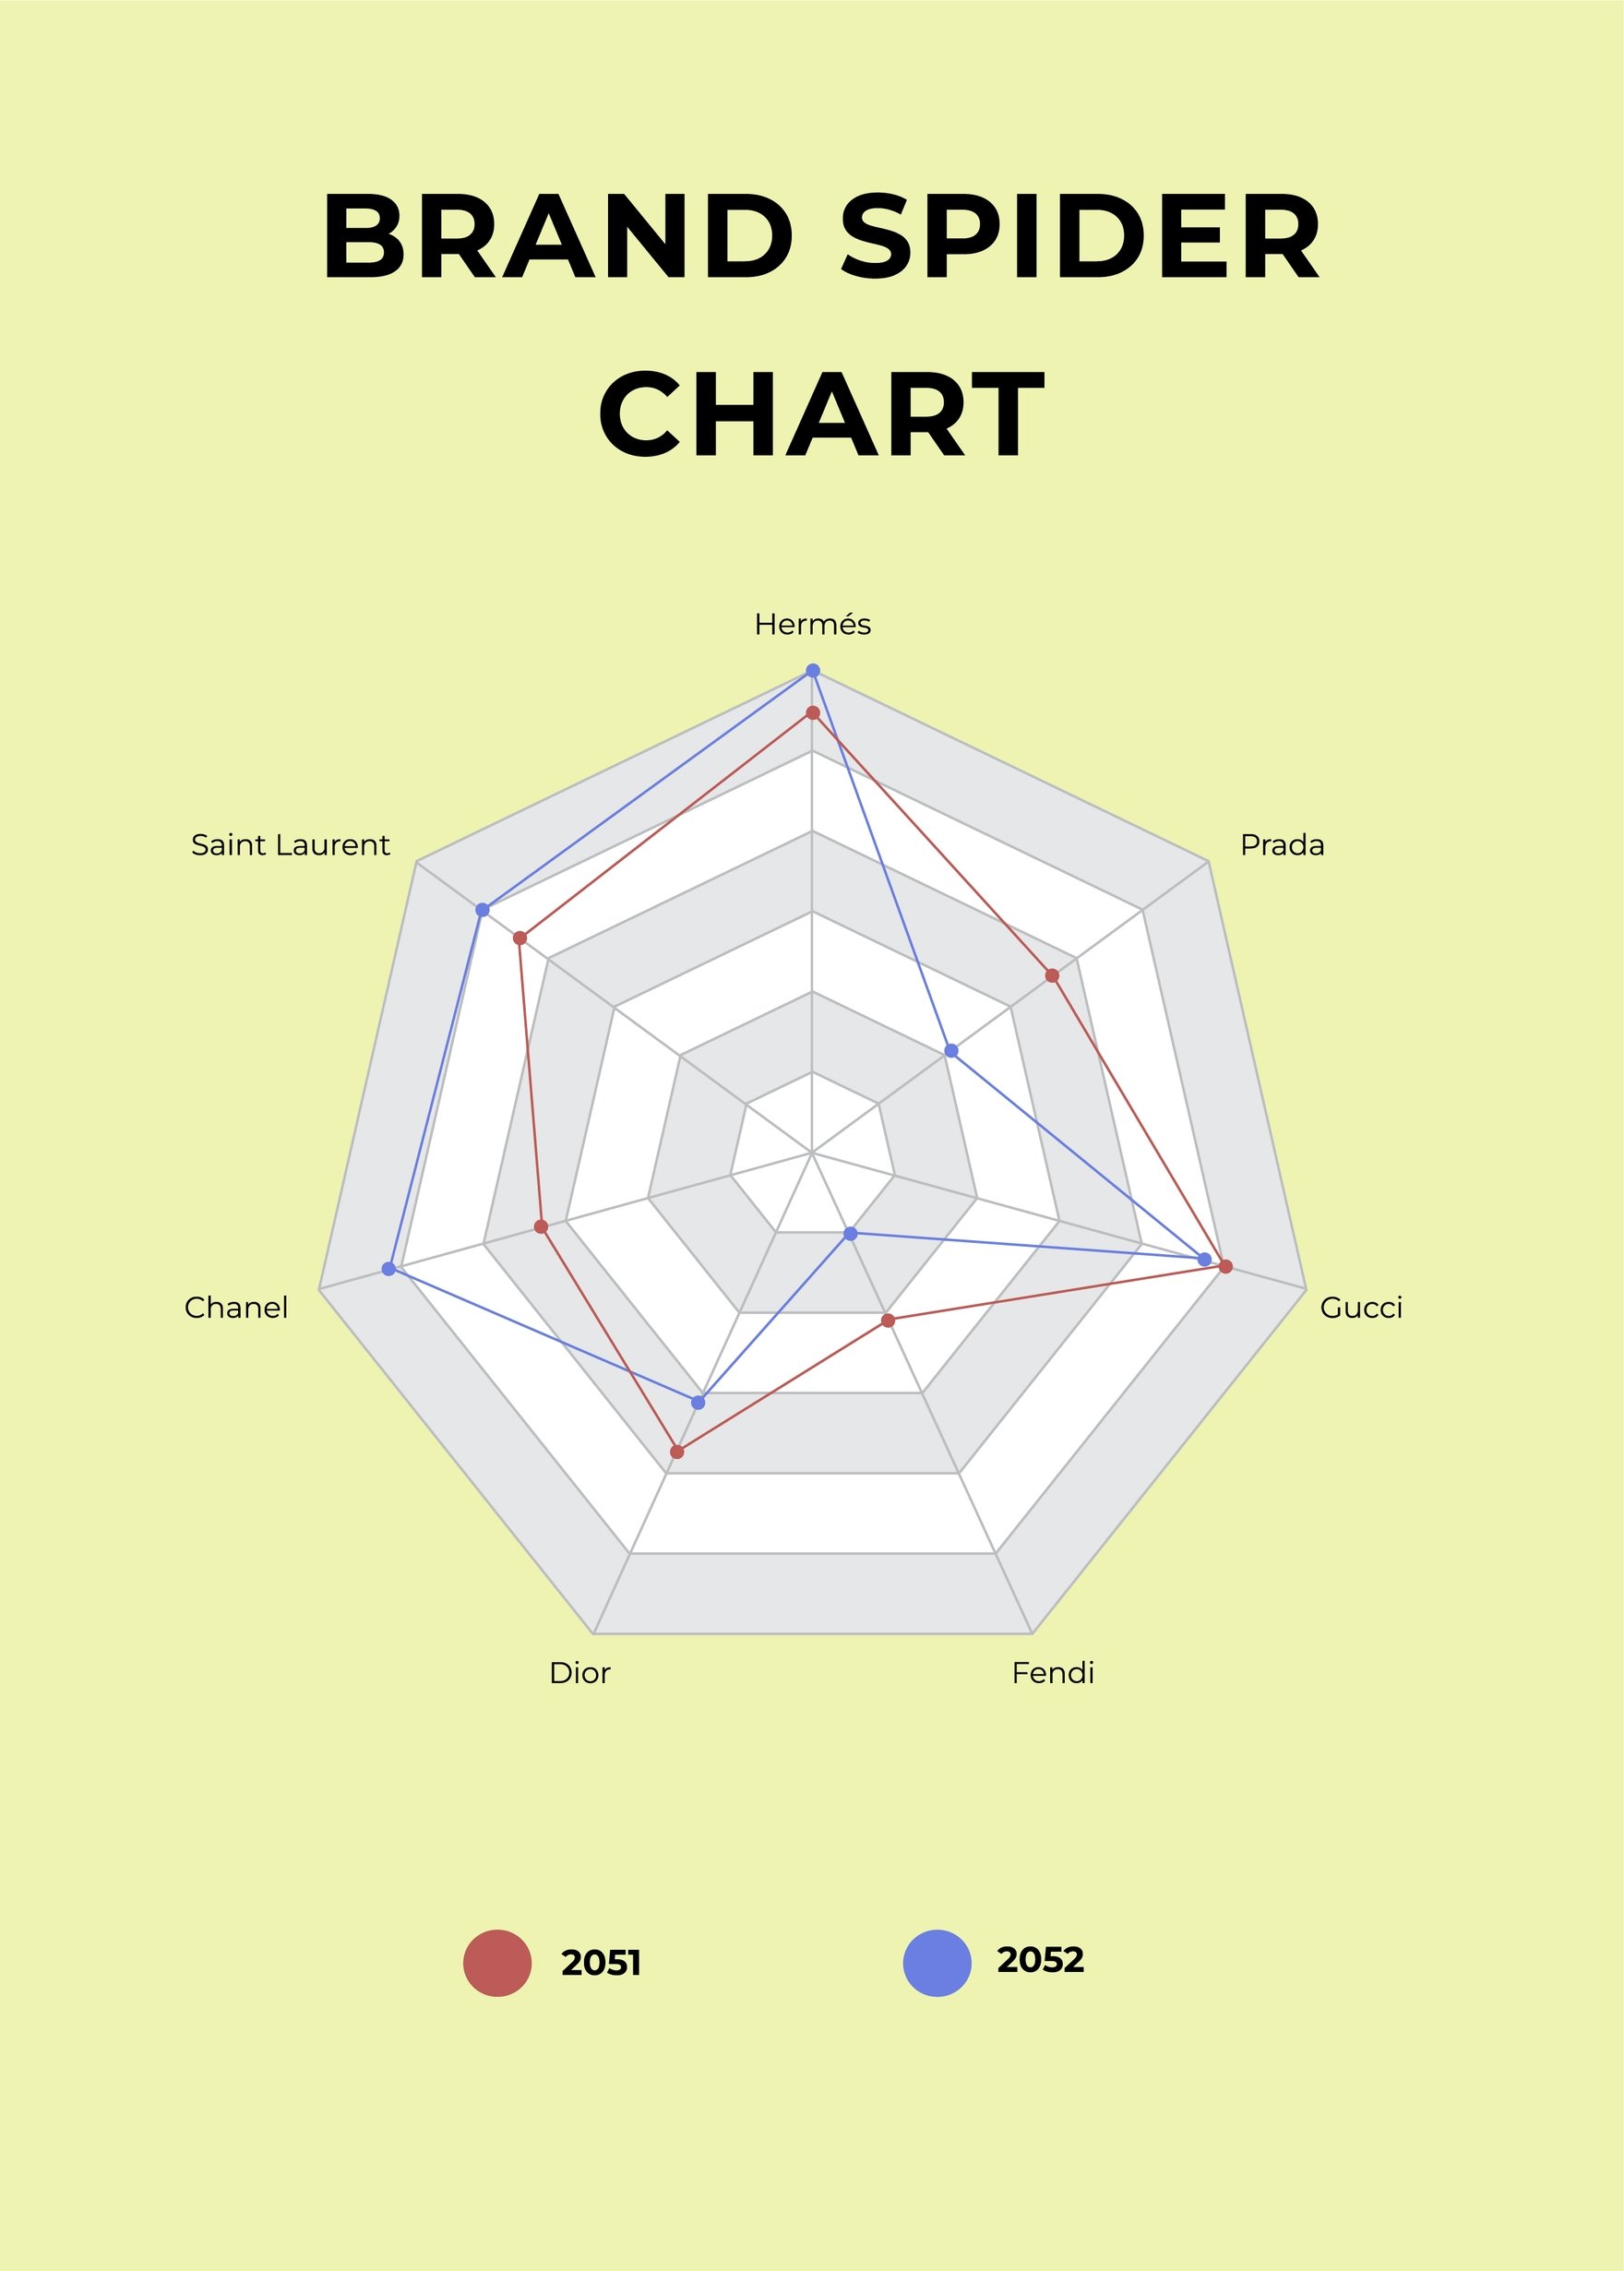 Free Brand Spider Chart Download in PDF, Illustrator